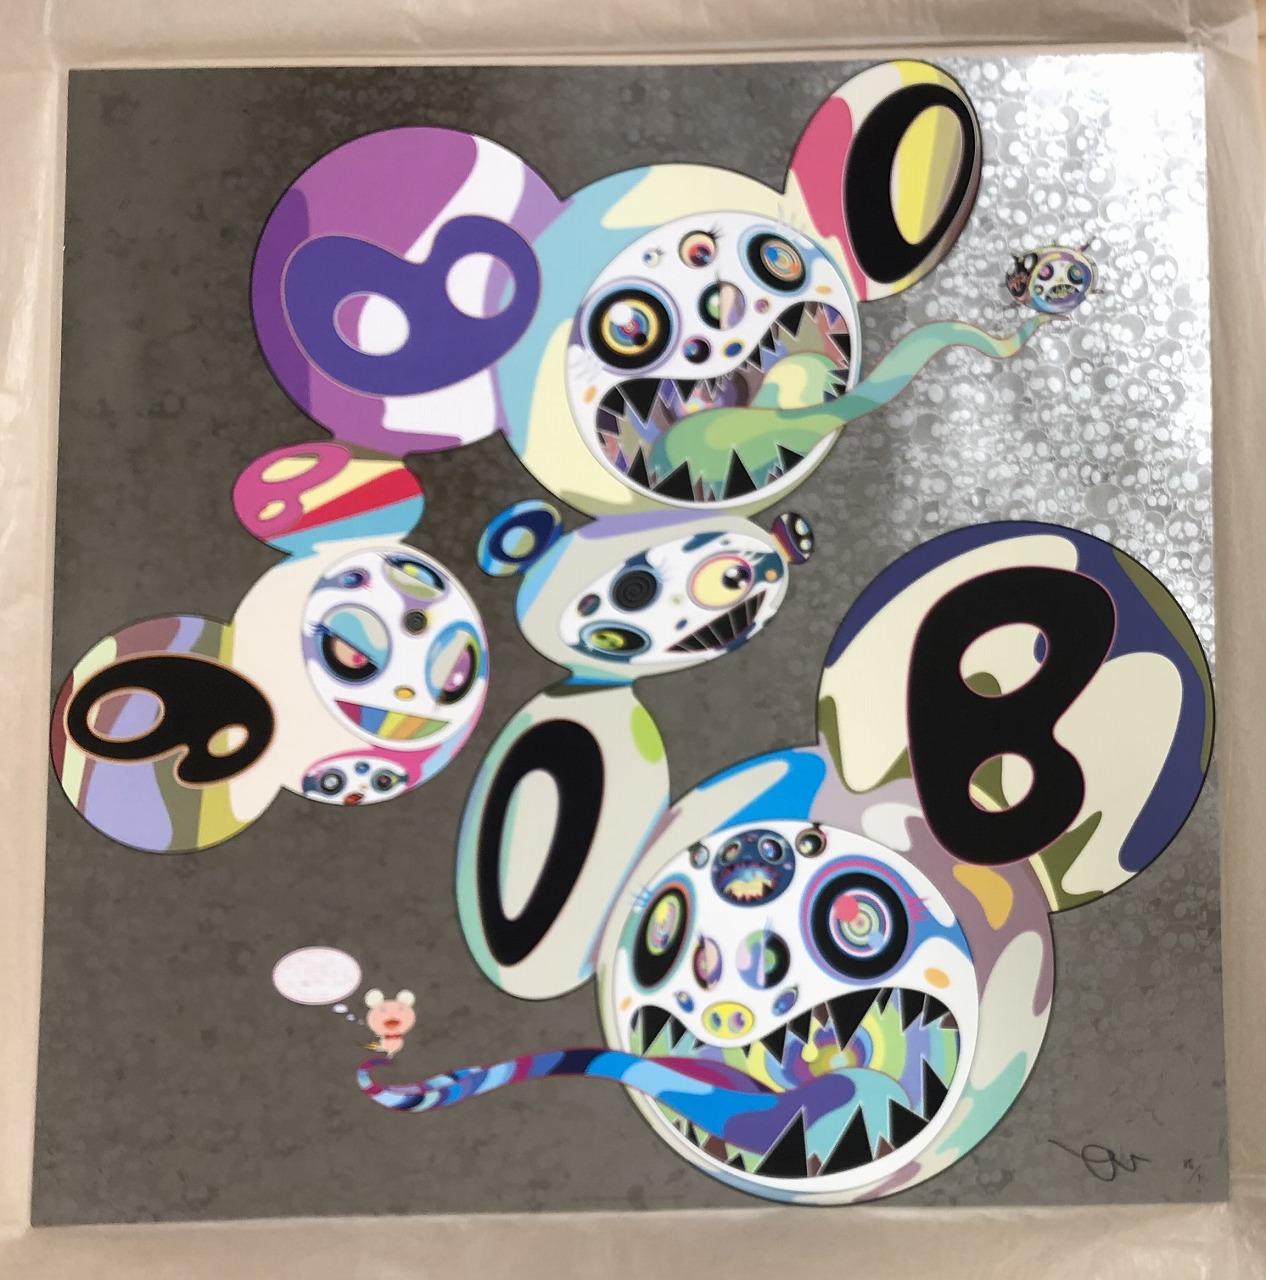 Spiral (2014). Limited Edition (print) by Murakami signed, numbered - Print by Takashi Murakami